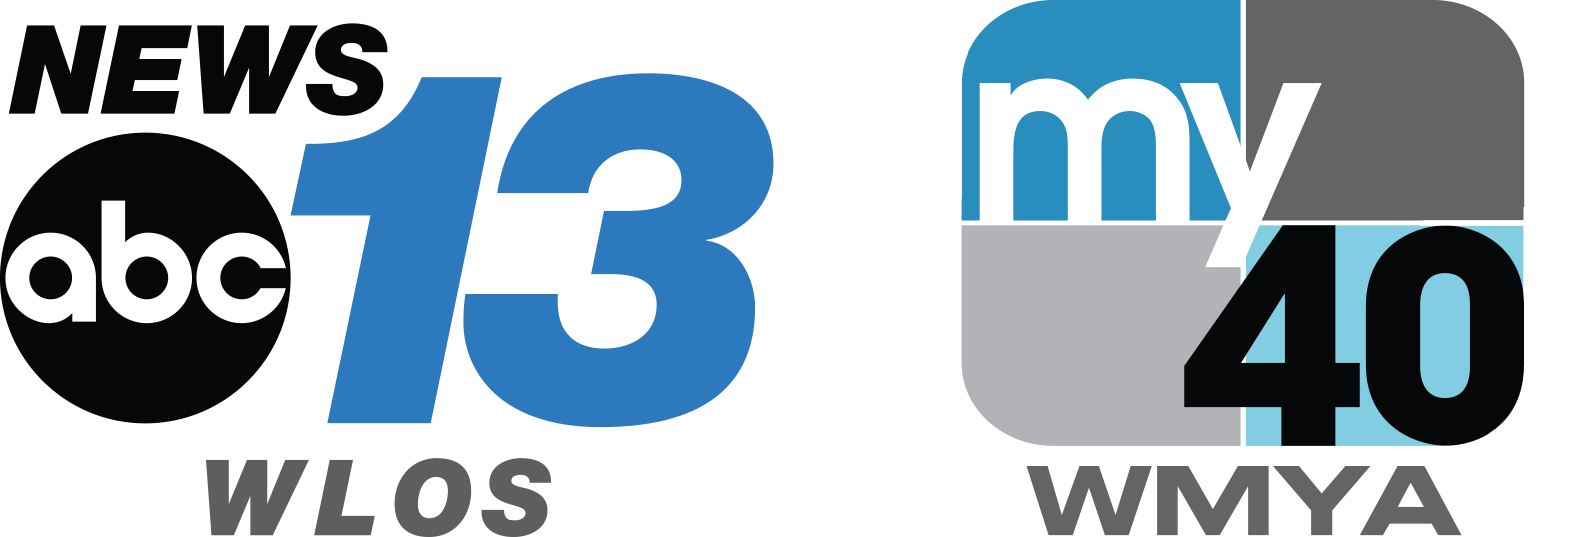 tv station logo business